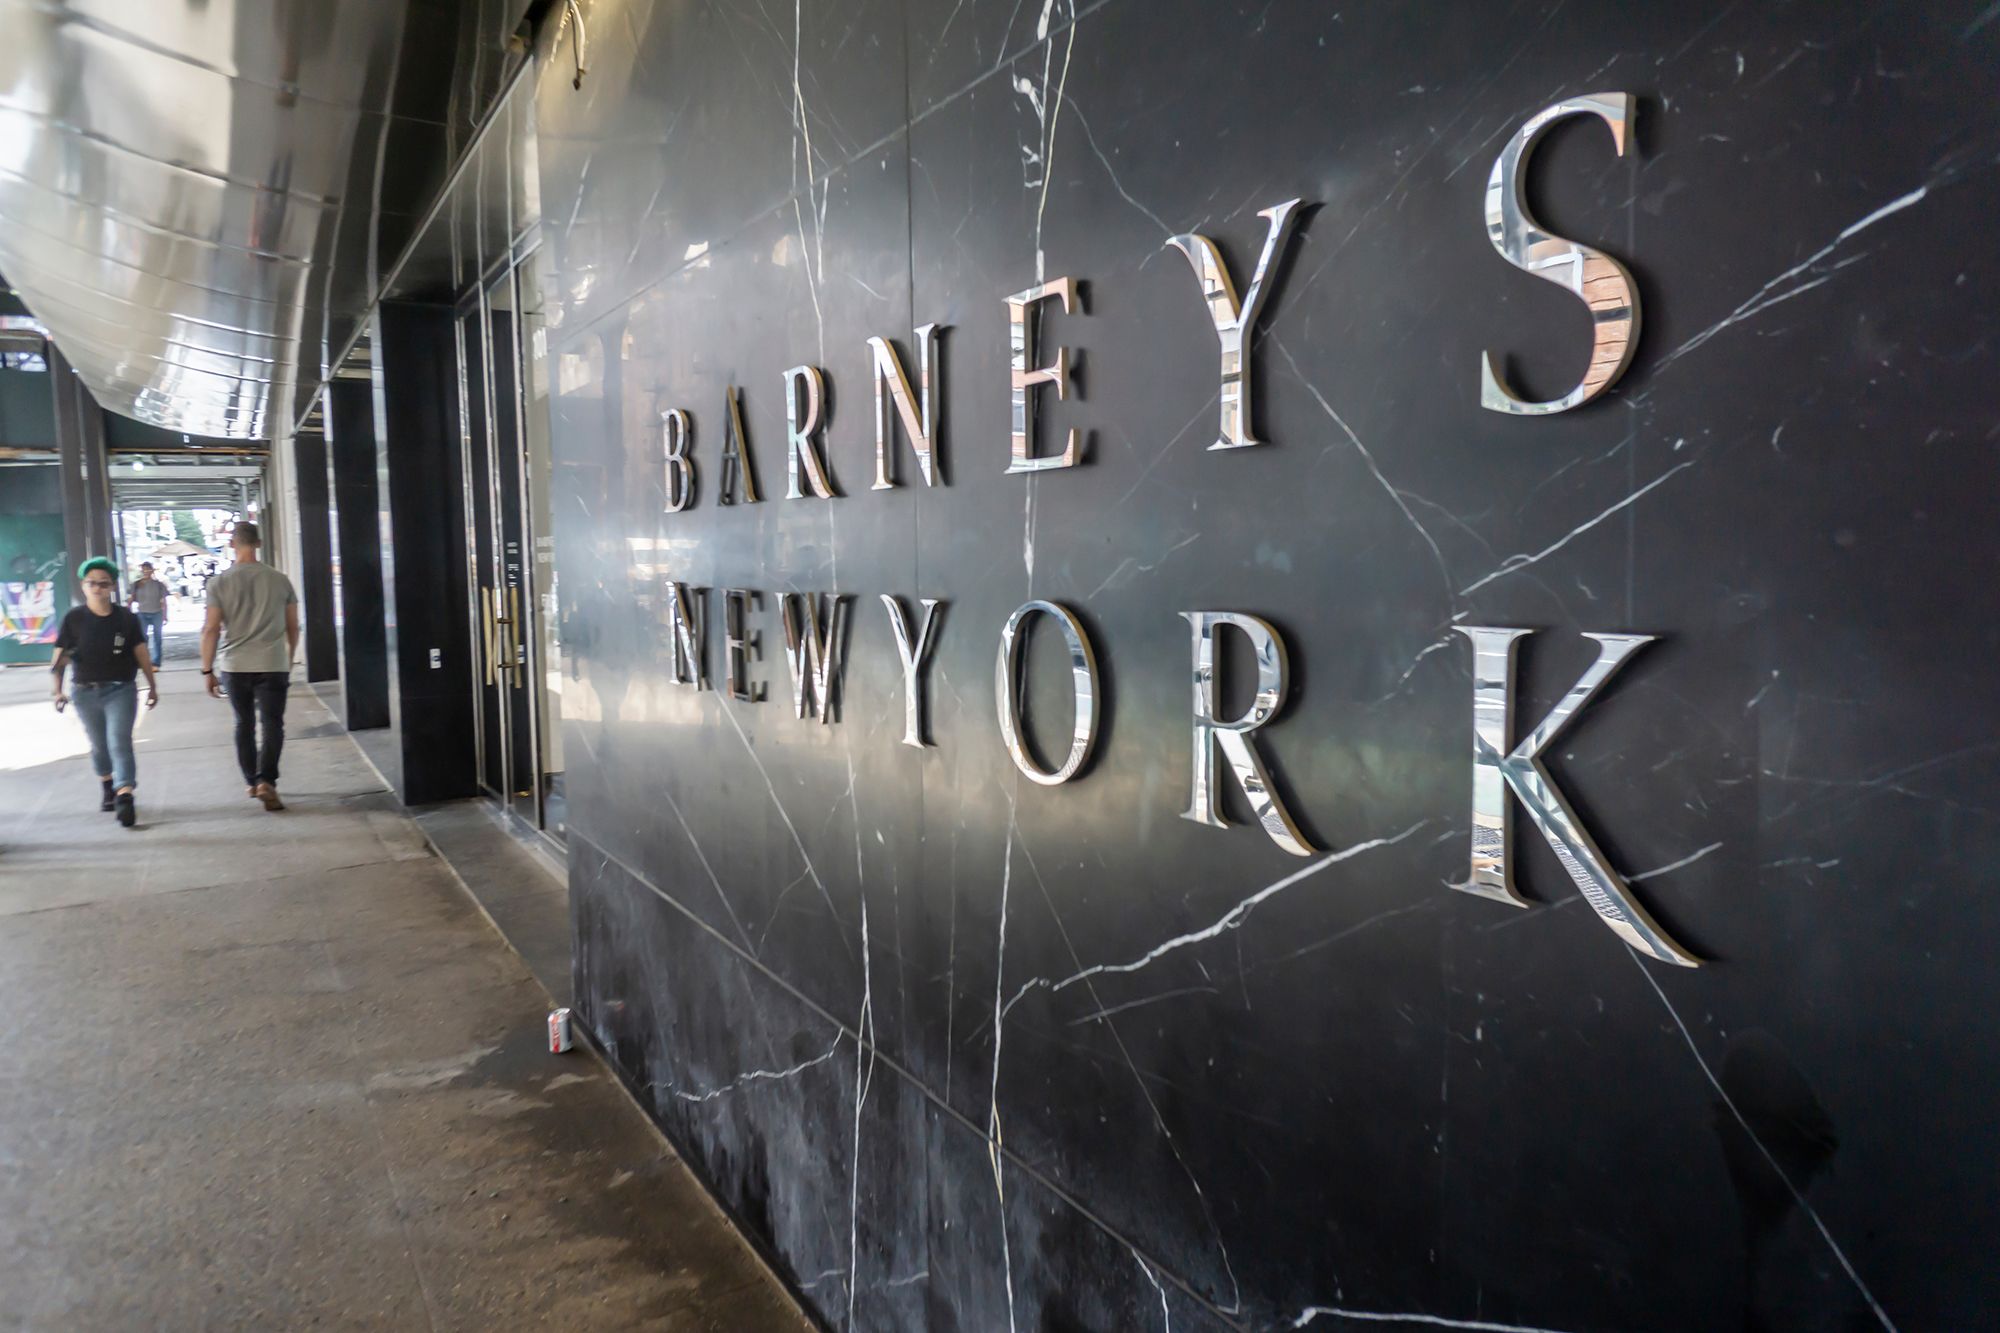 Barneys New York, Manhattan, Shopping